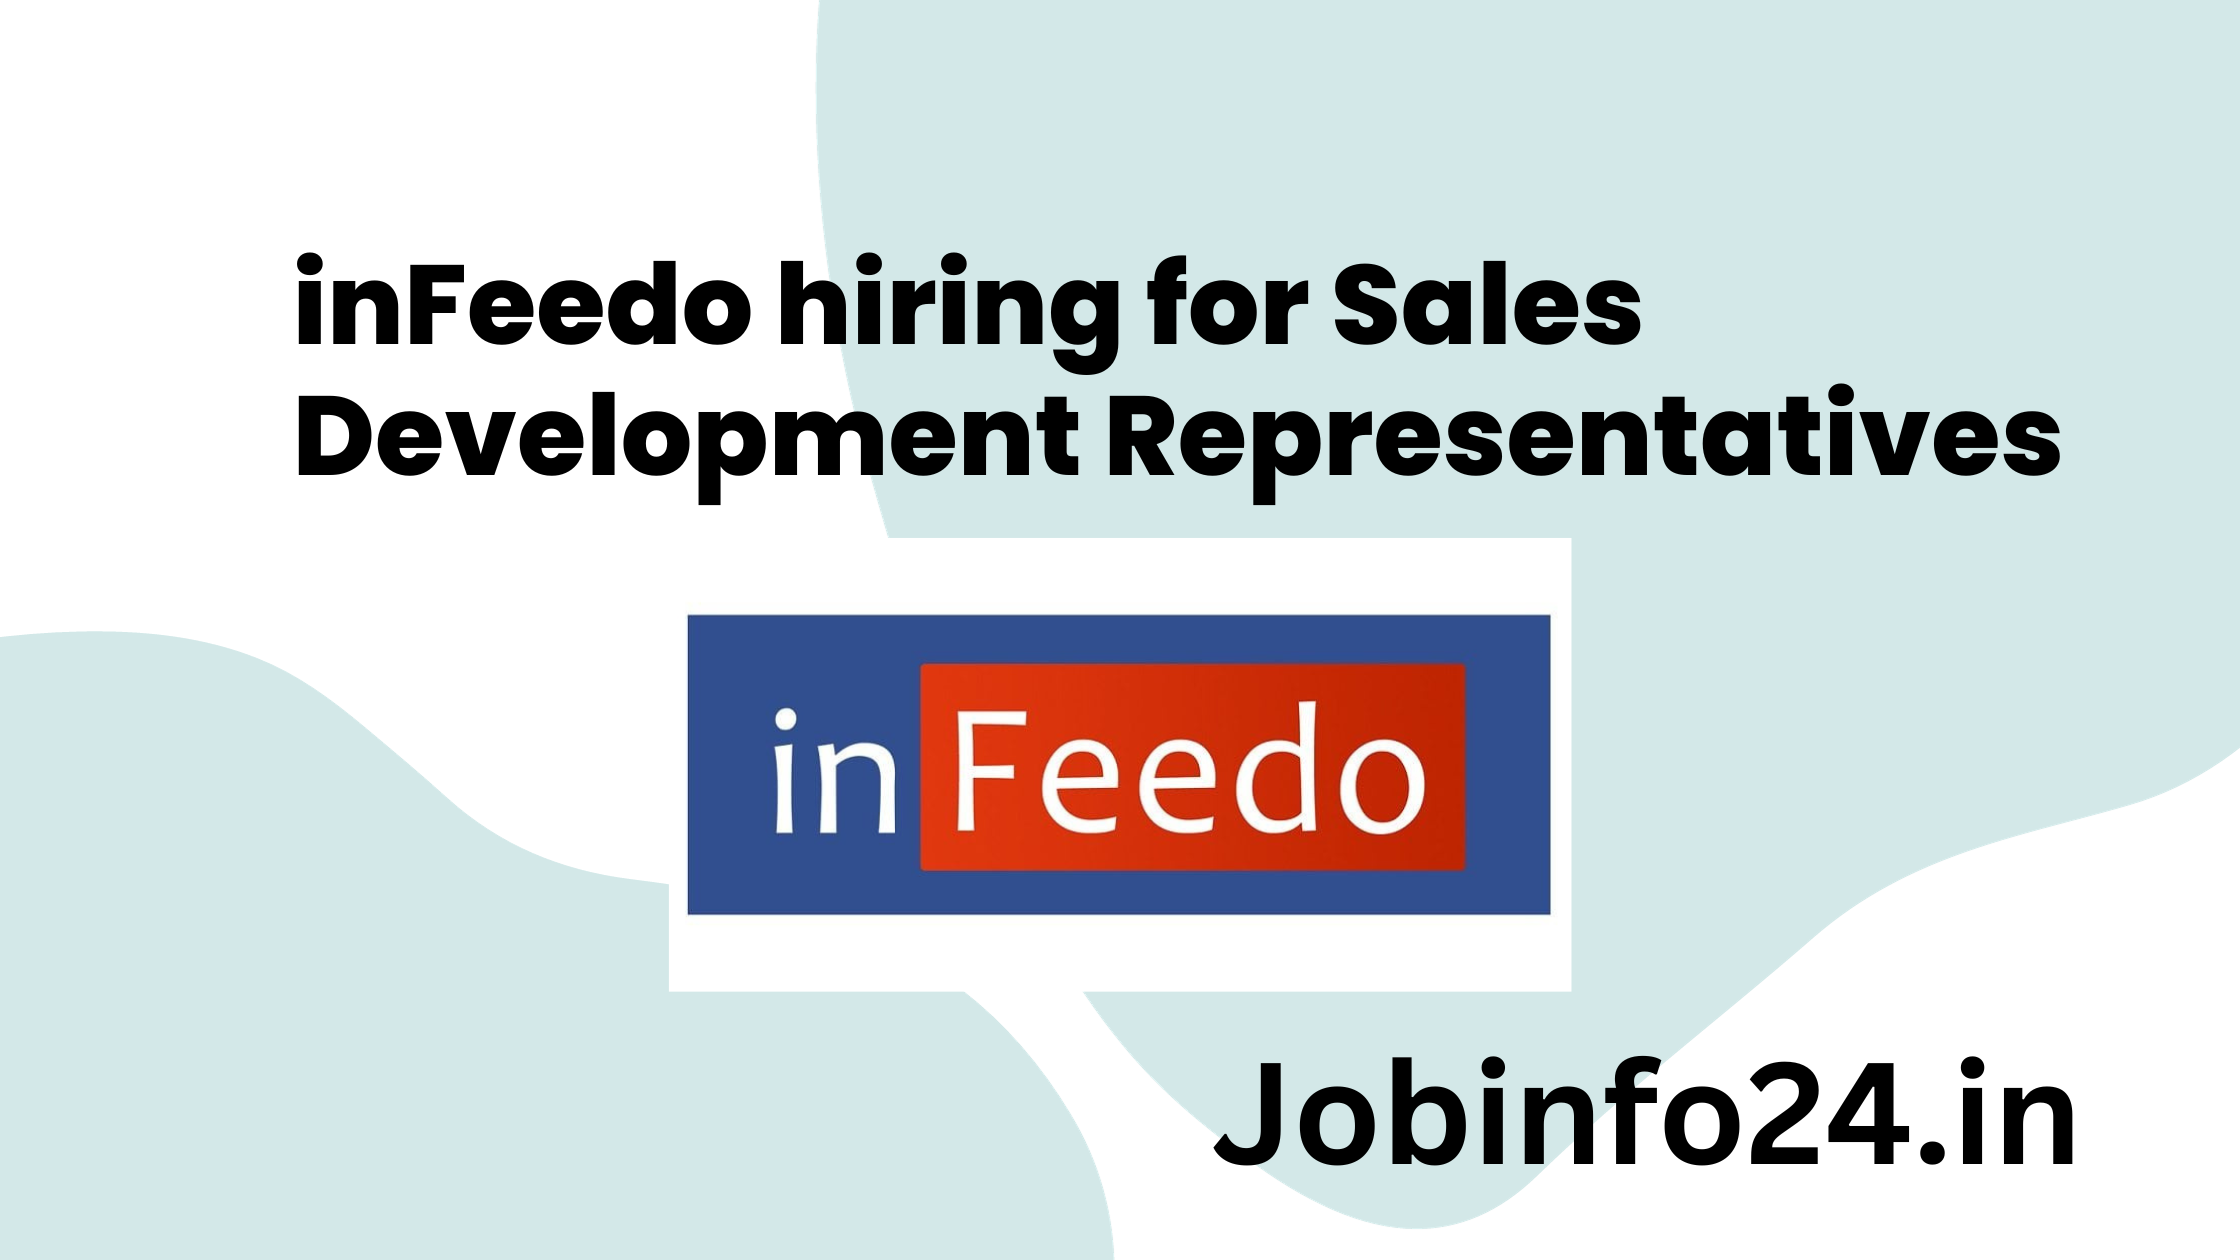 inFeedo hiring for Sales Development Representatives